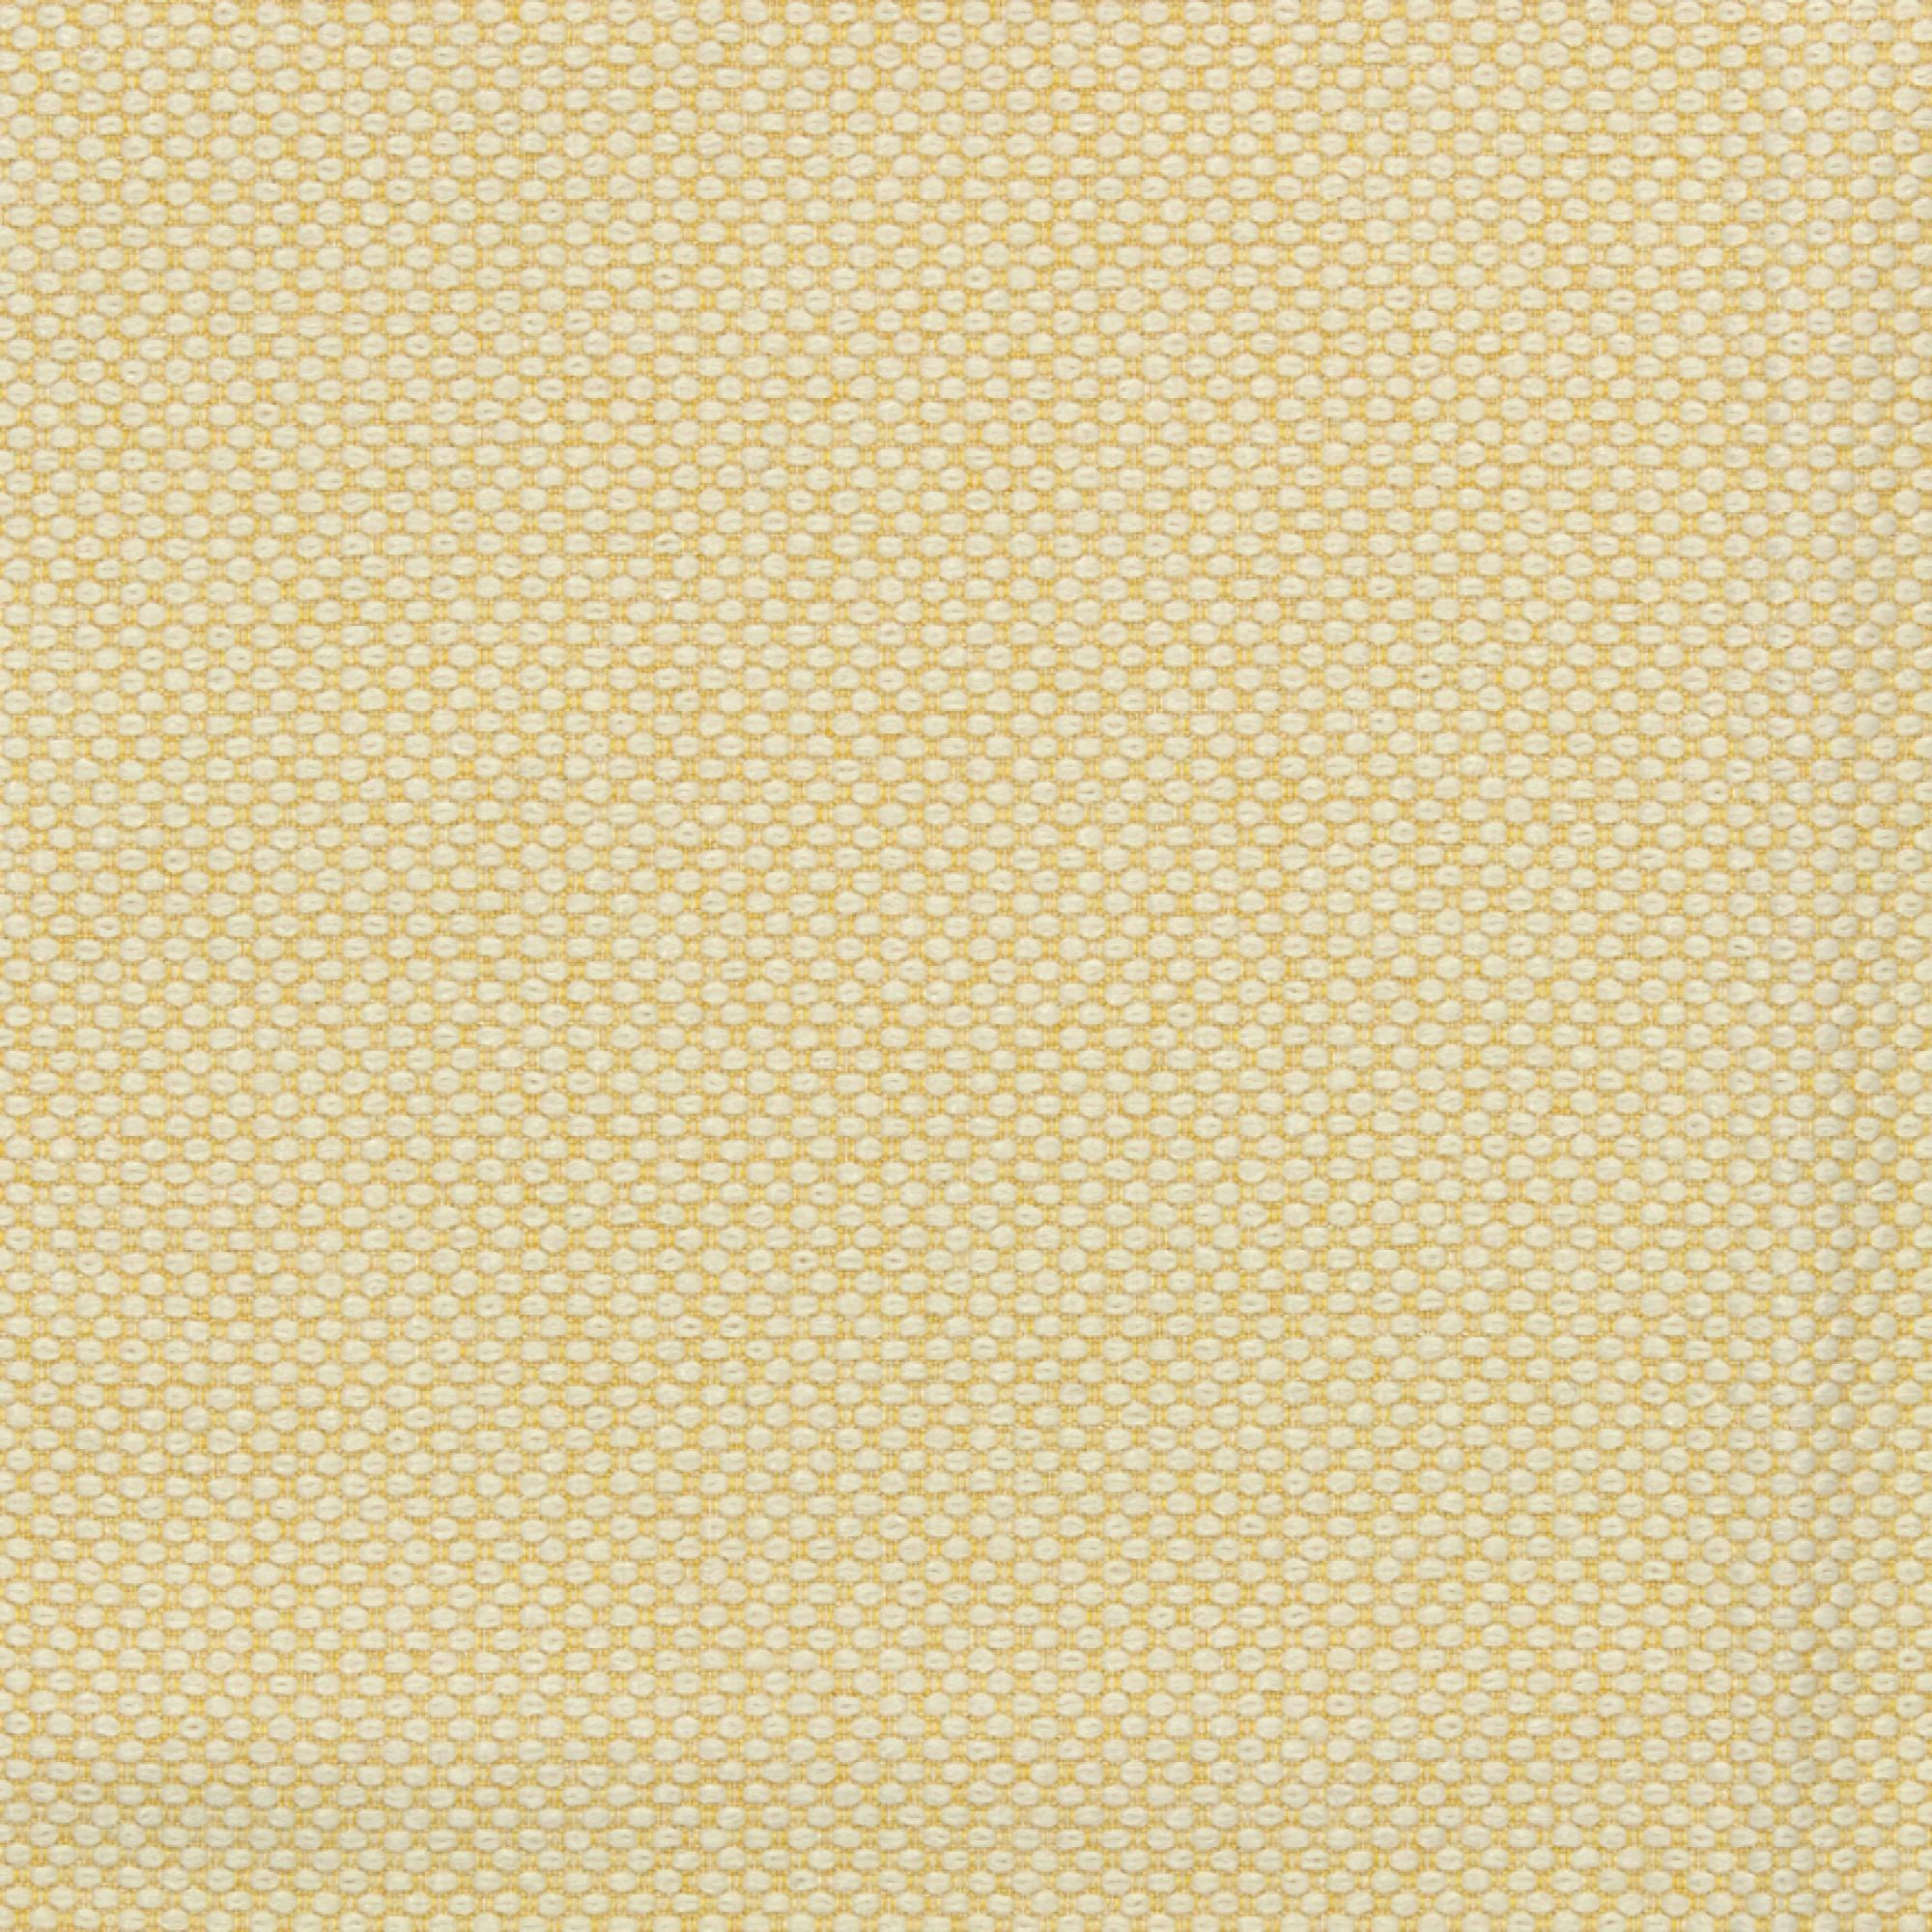 Fabric sample Merit 0024 yellow